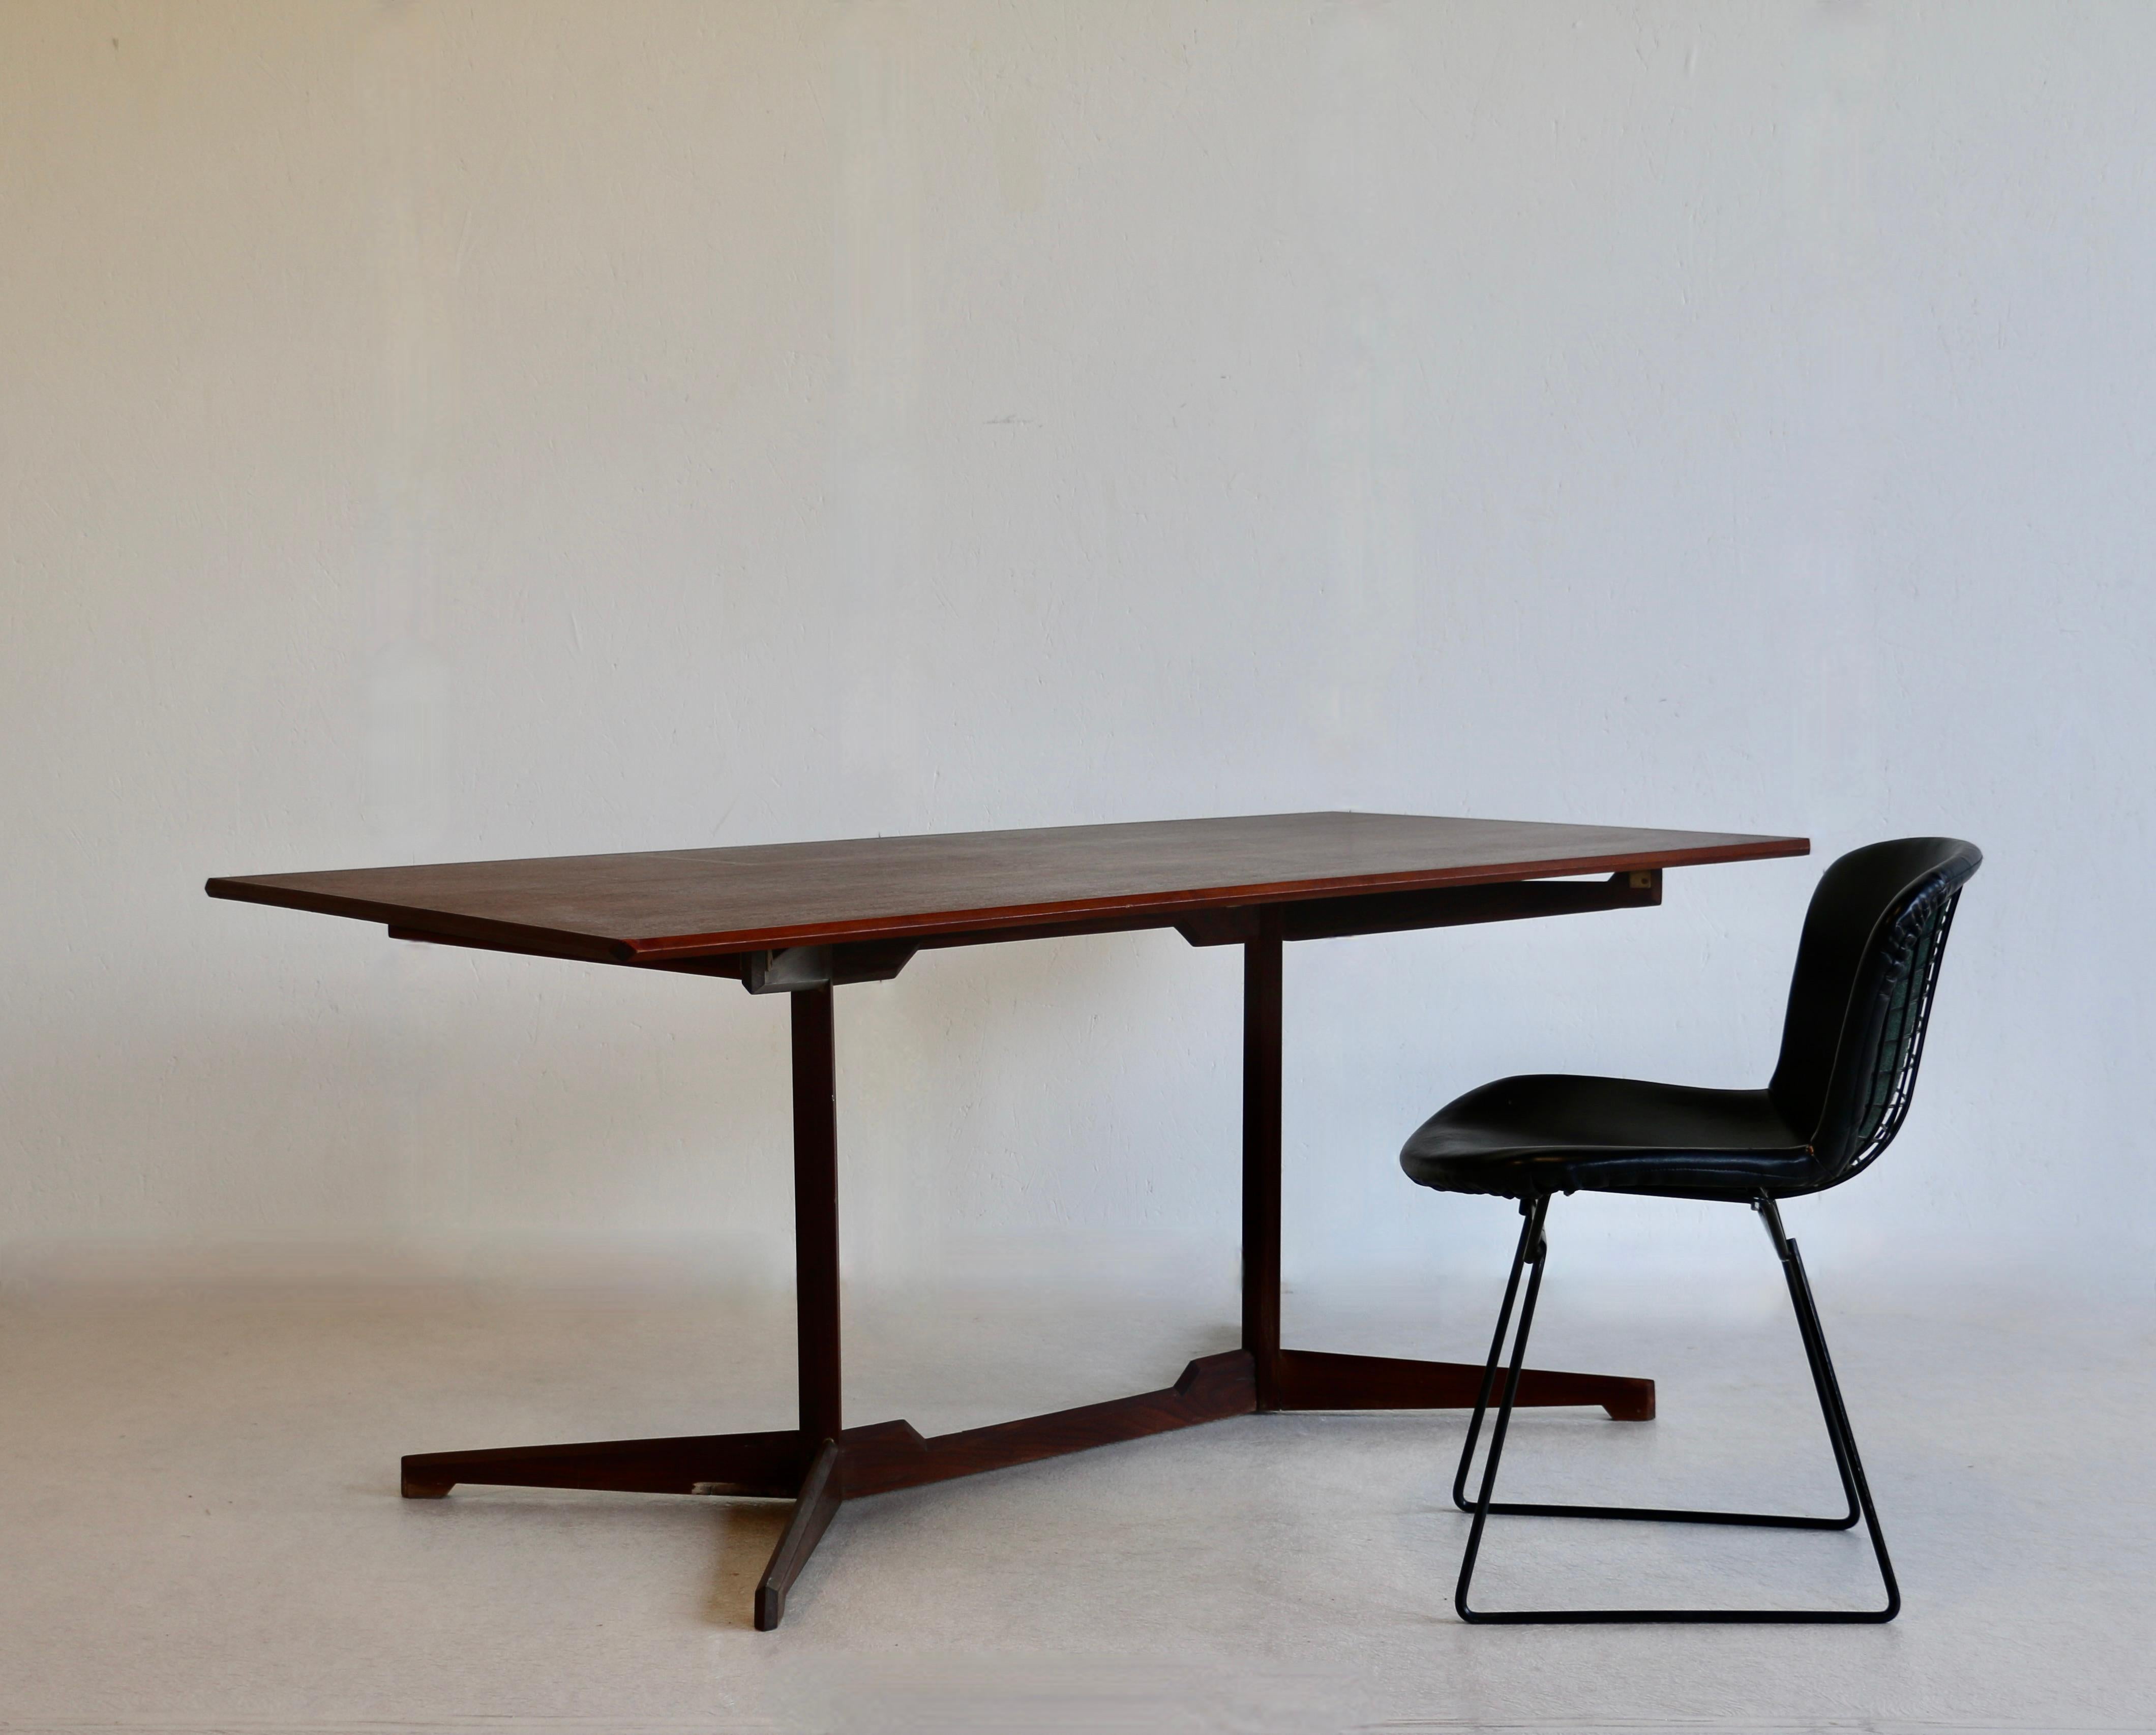 An attractive all-wood desk with oak veneer top and solid oak legs. Italian work, 70's.